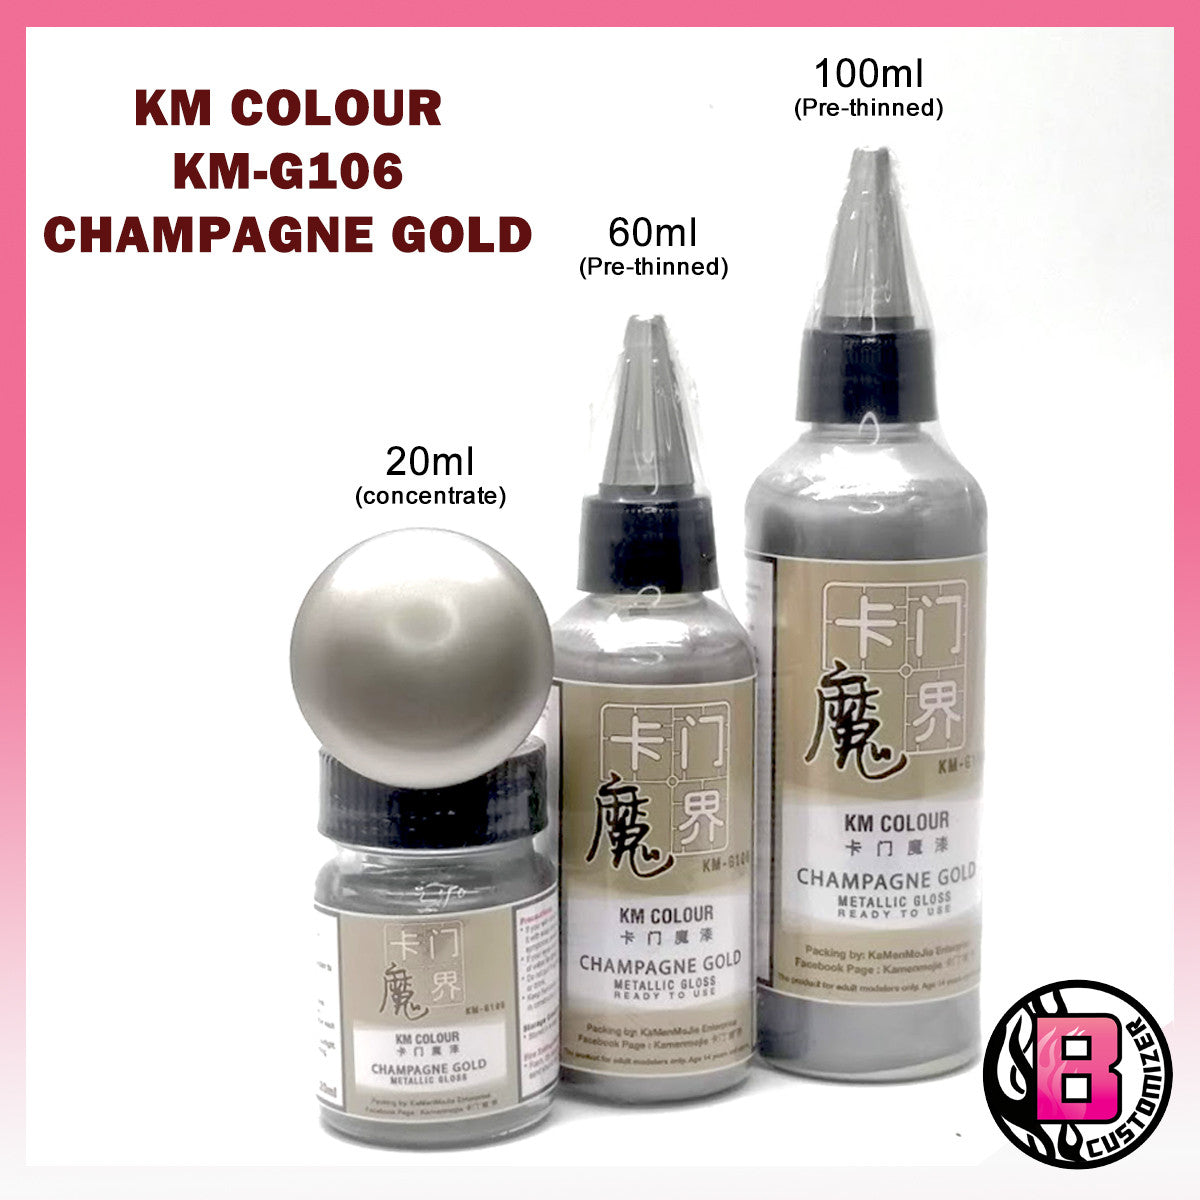 KM Colour Champagne Gold (KM-G106)